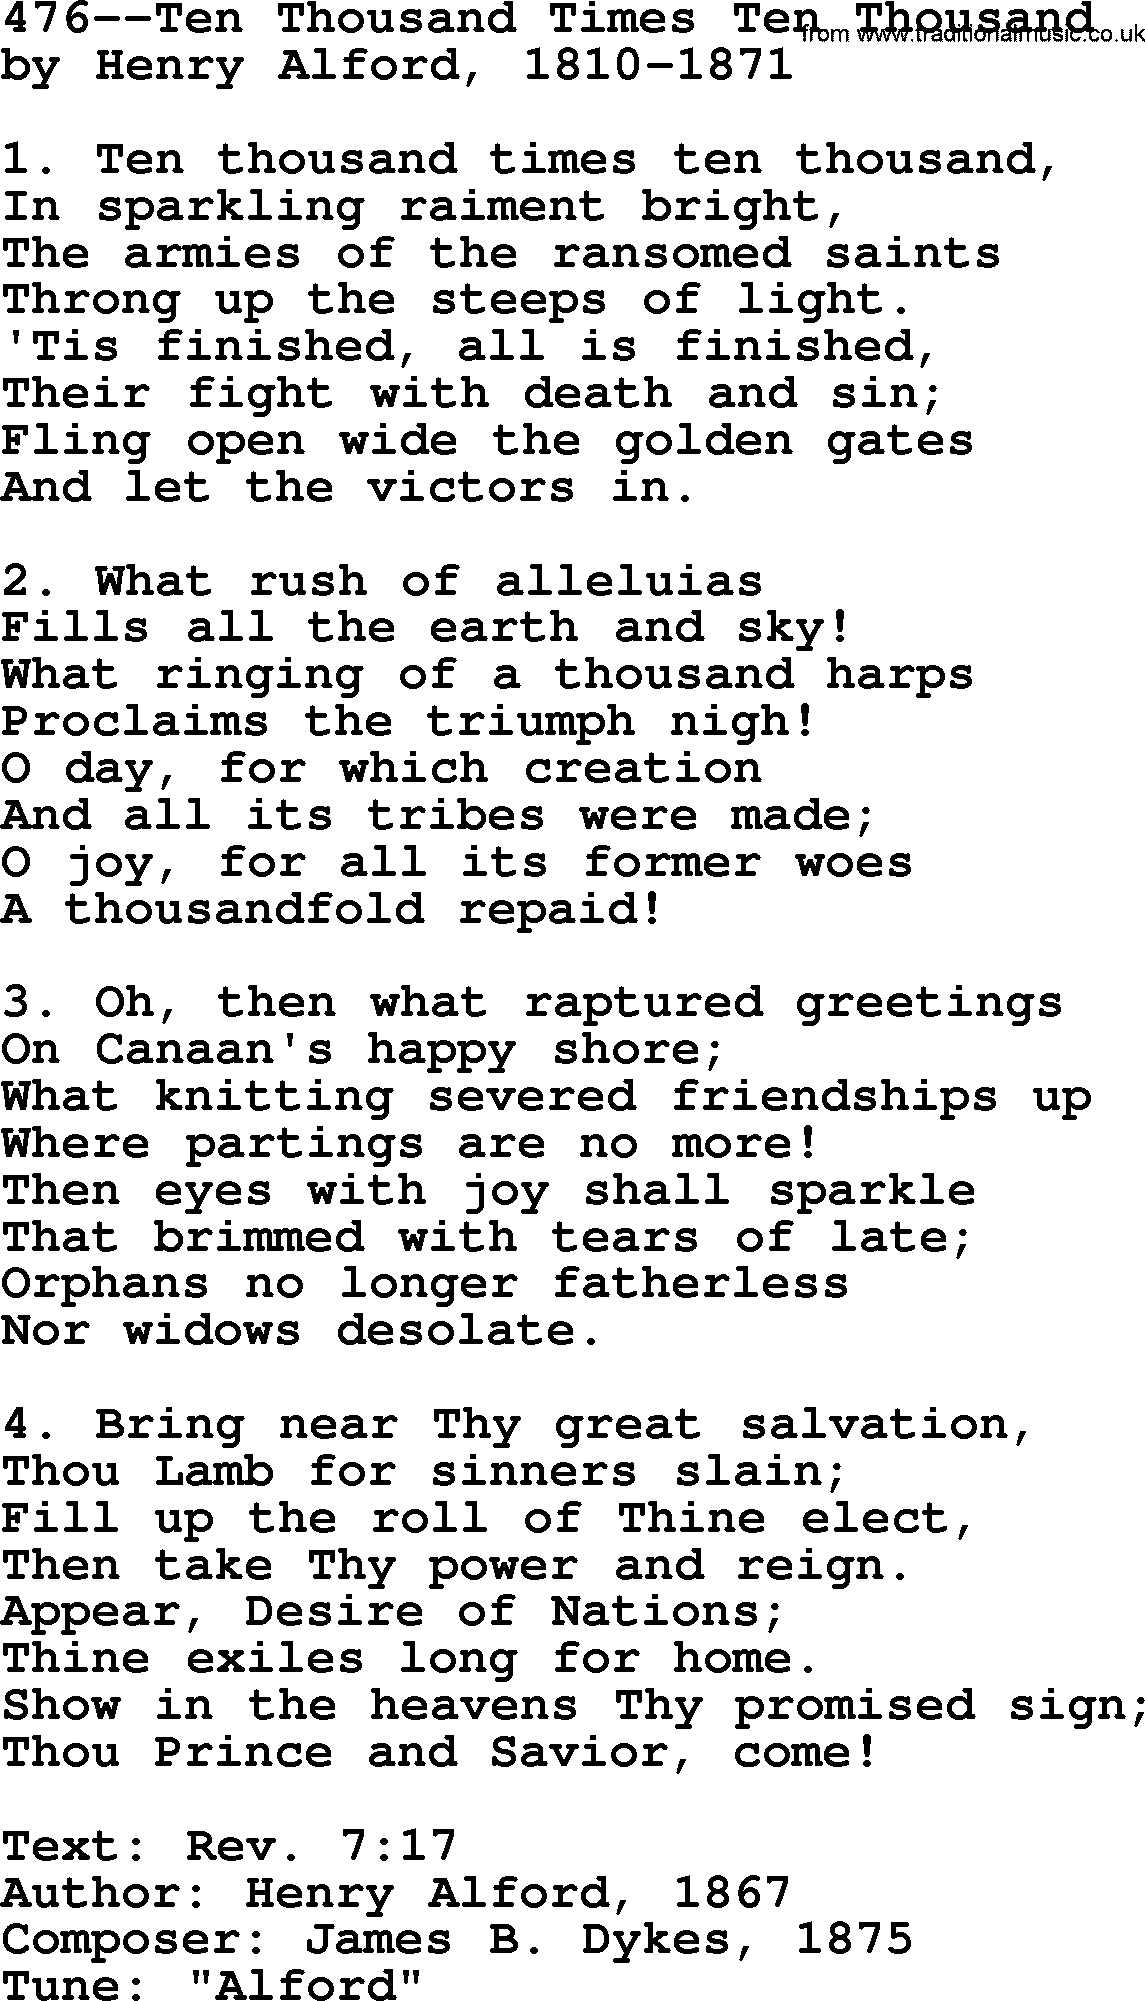 Lutheran Hymn: 476--Ten Thousand Times Ten Thousand.txt lyrics with PDF